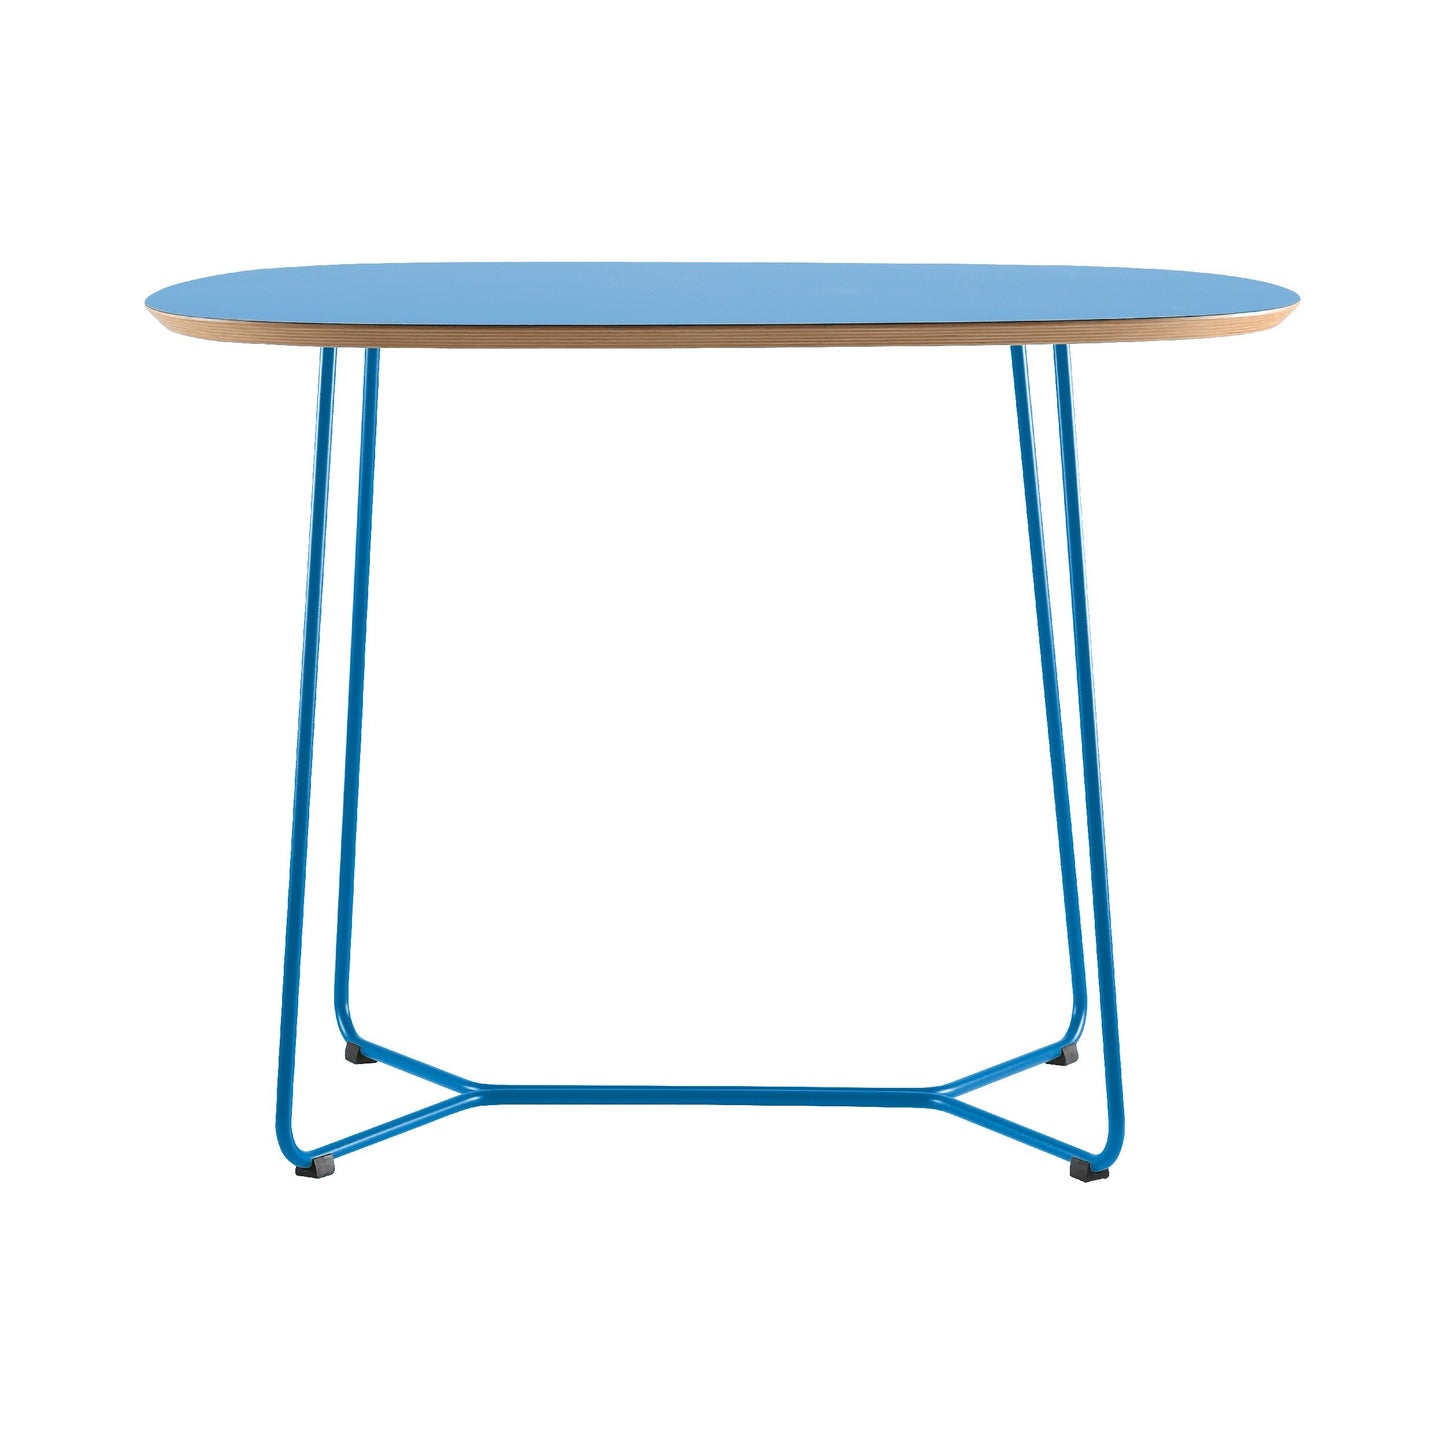 Table Maple M05 - Blue